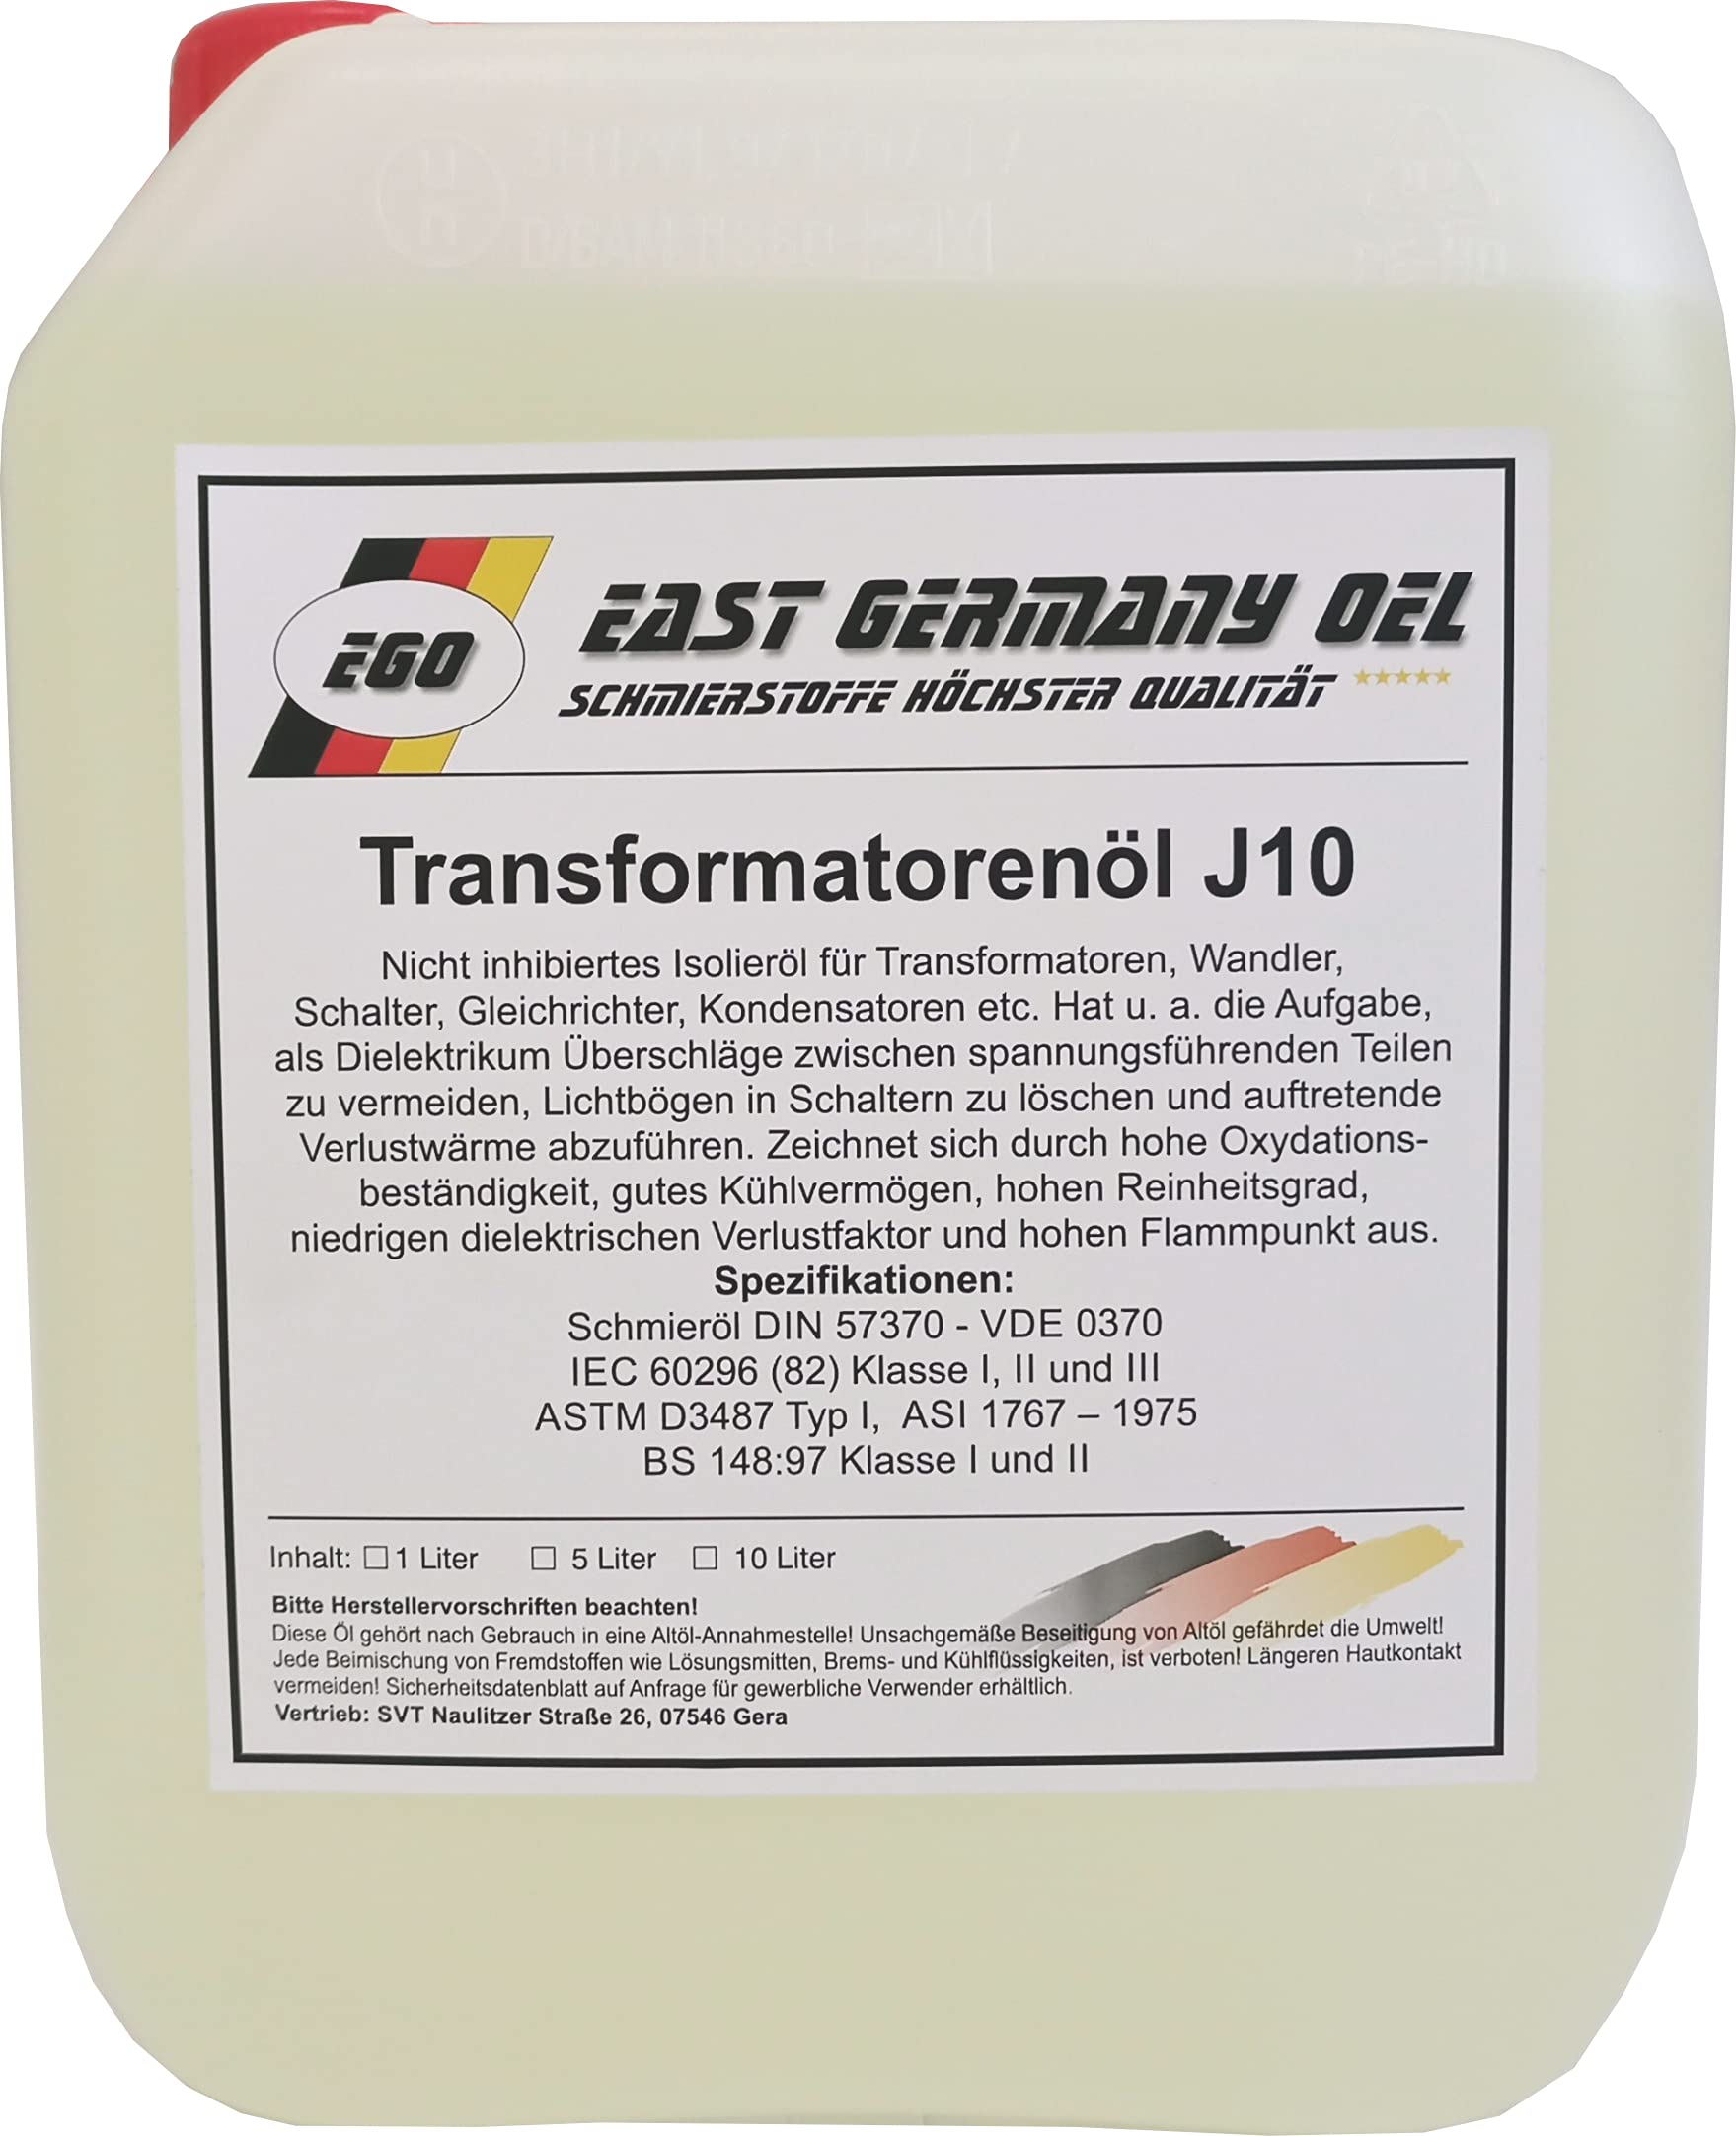 East Germany OIL Transformatorenöl, Kanister 5 Liter